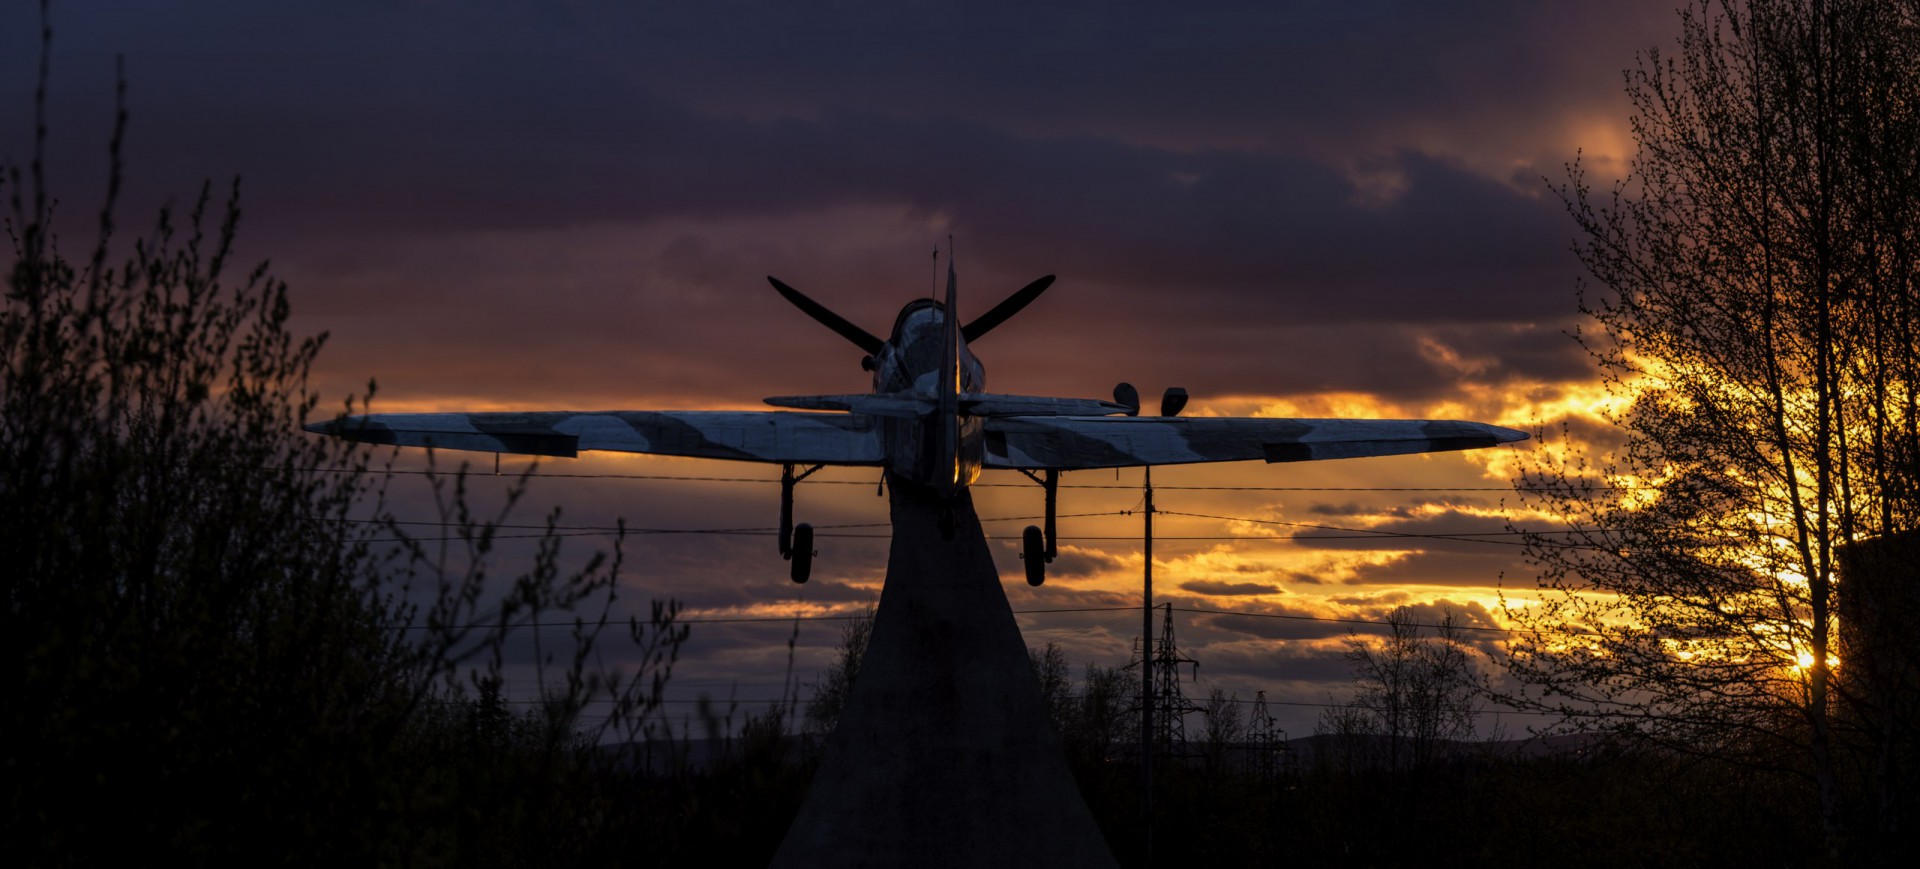 Памятник-самолет «Хаукер-Харрикейн». Фото Павла Корепина